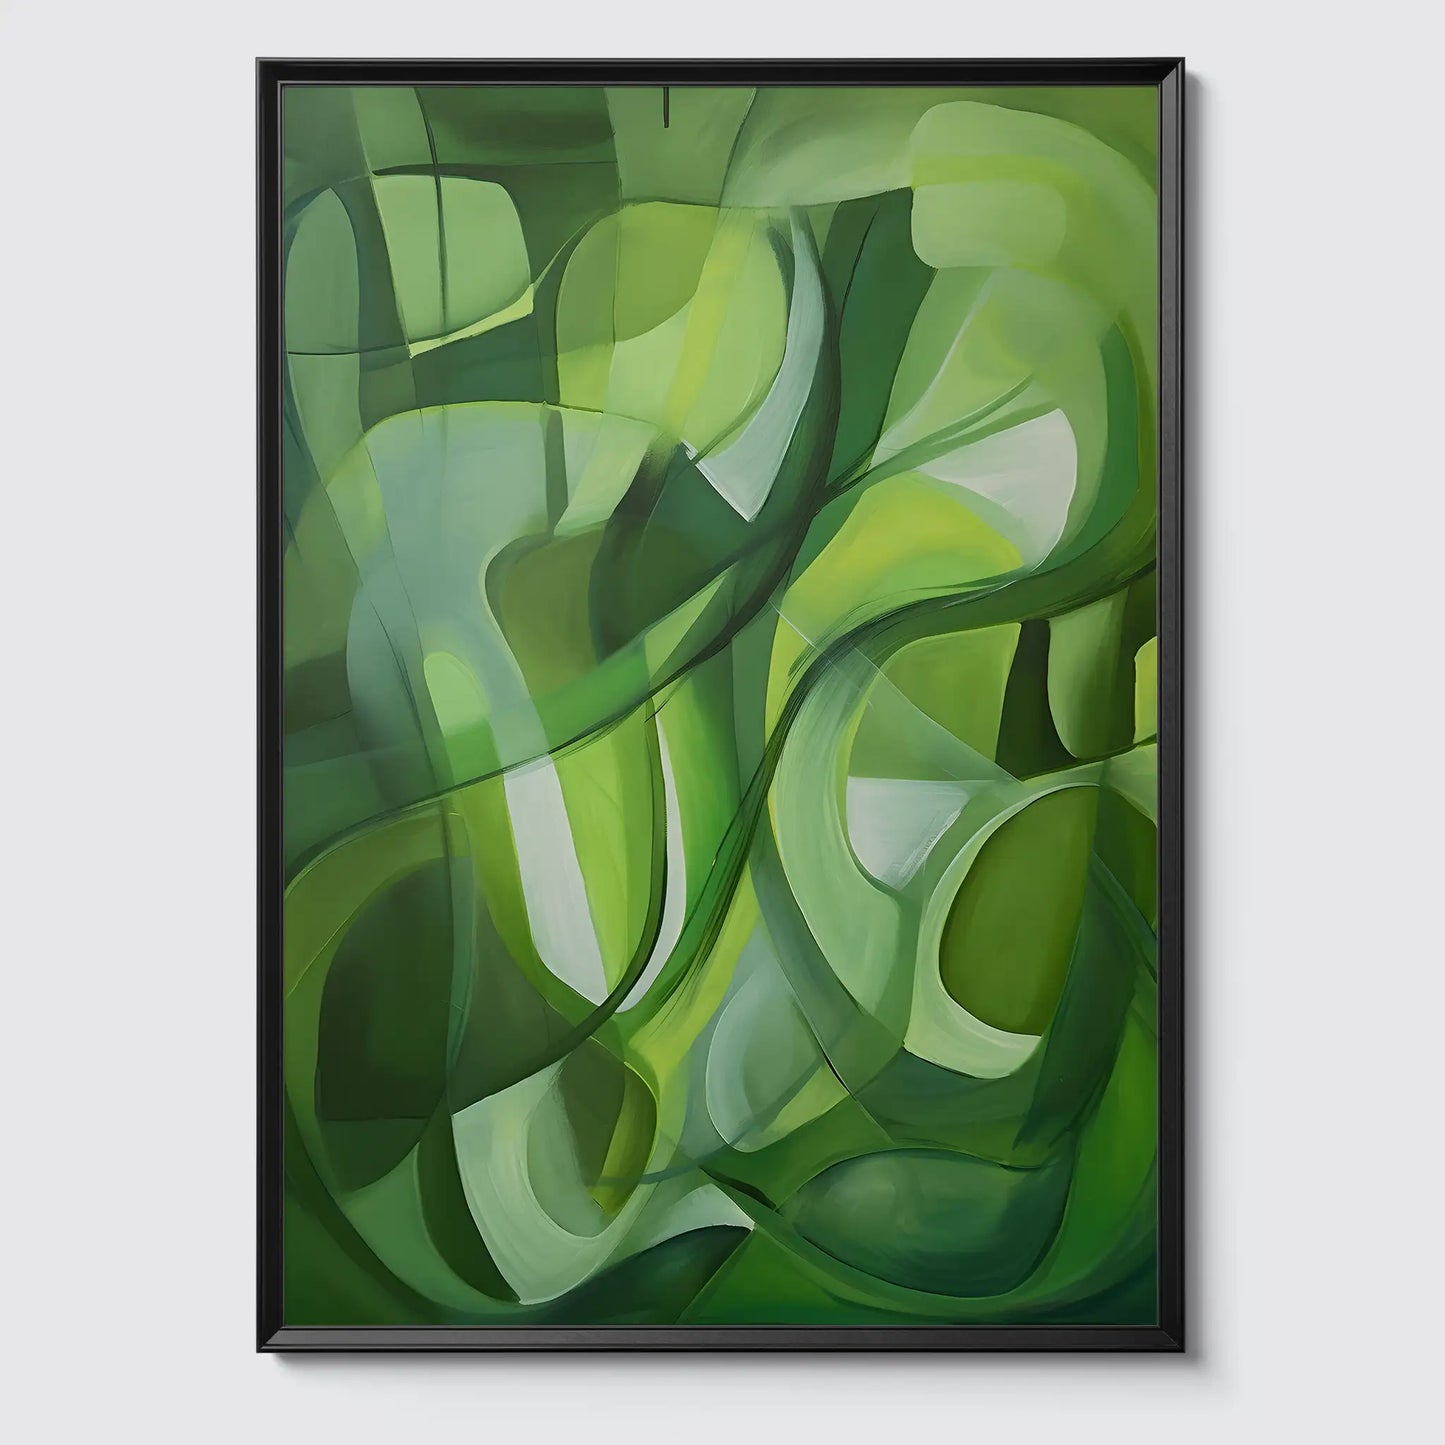 Abstract Green Hard Lines No 1 - Poster